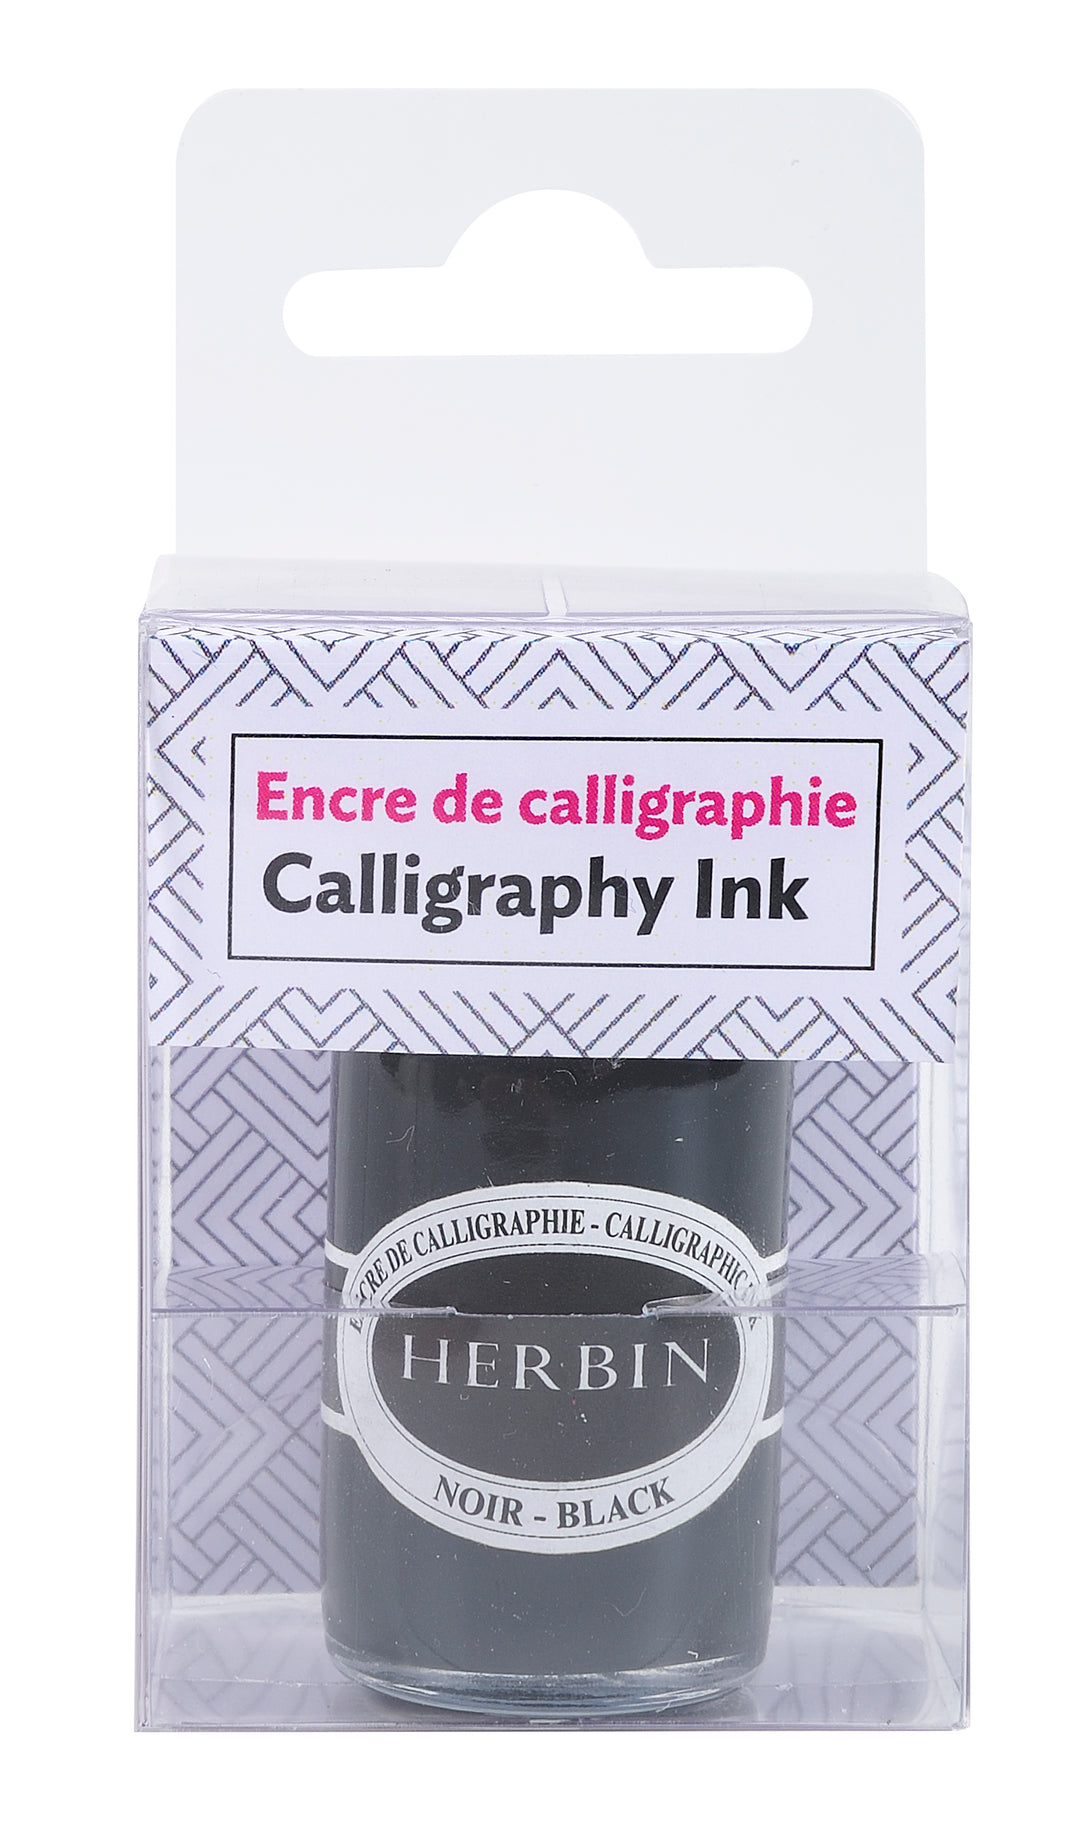 Calligraphy Inks